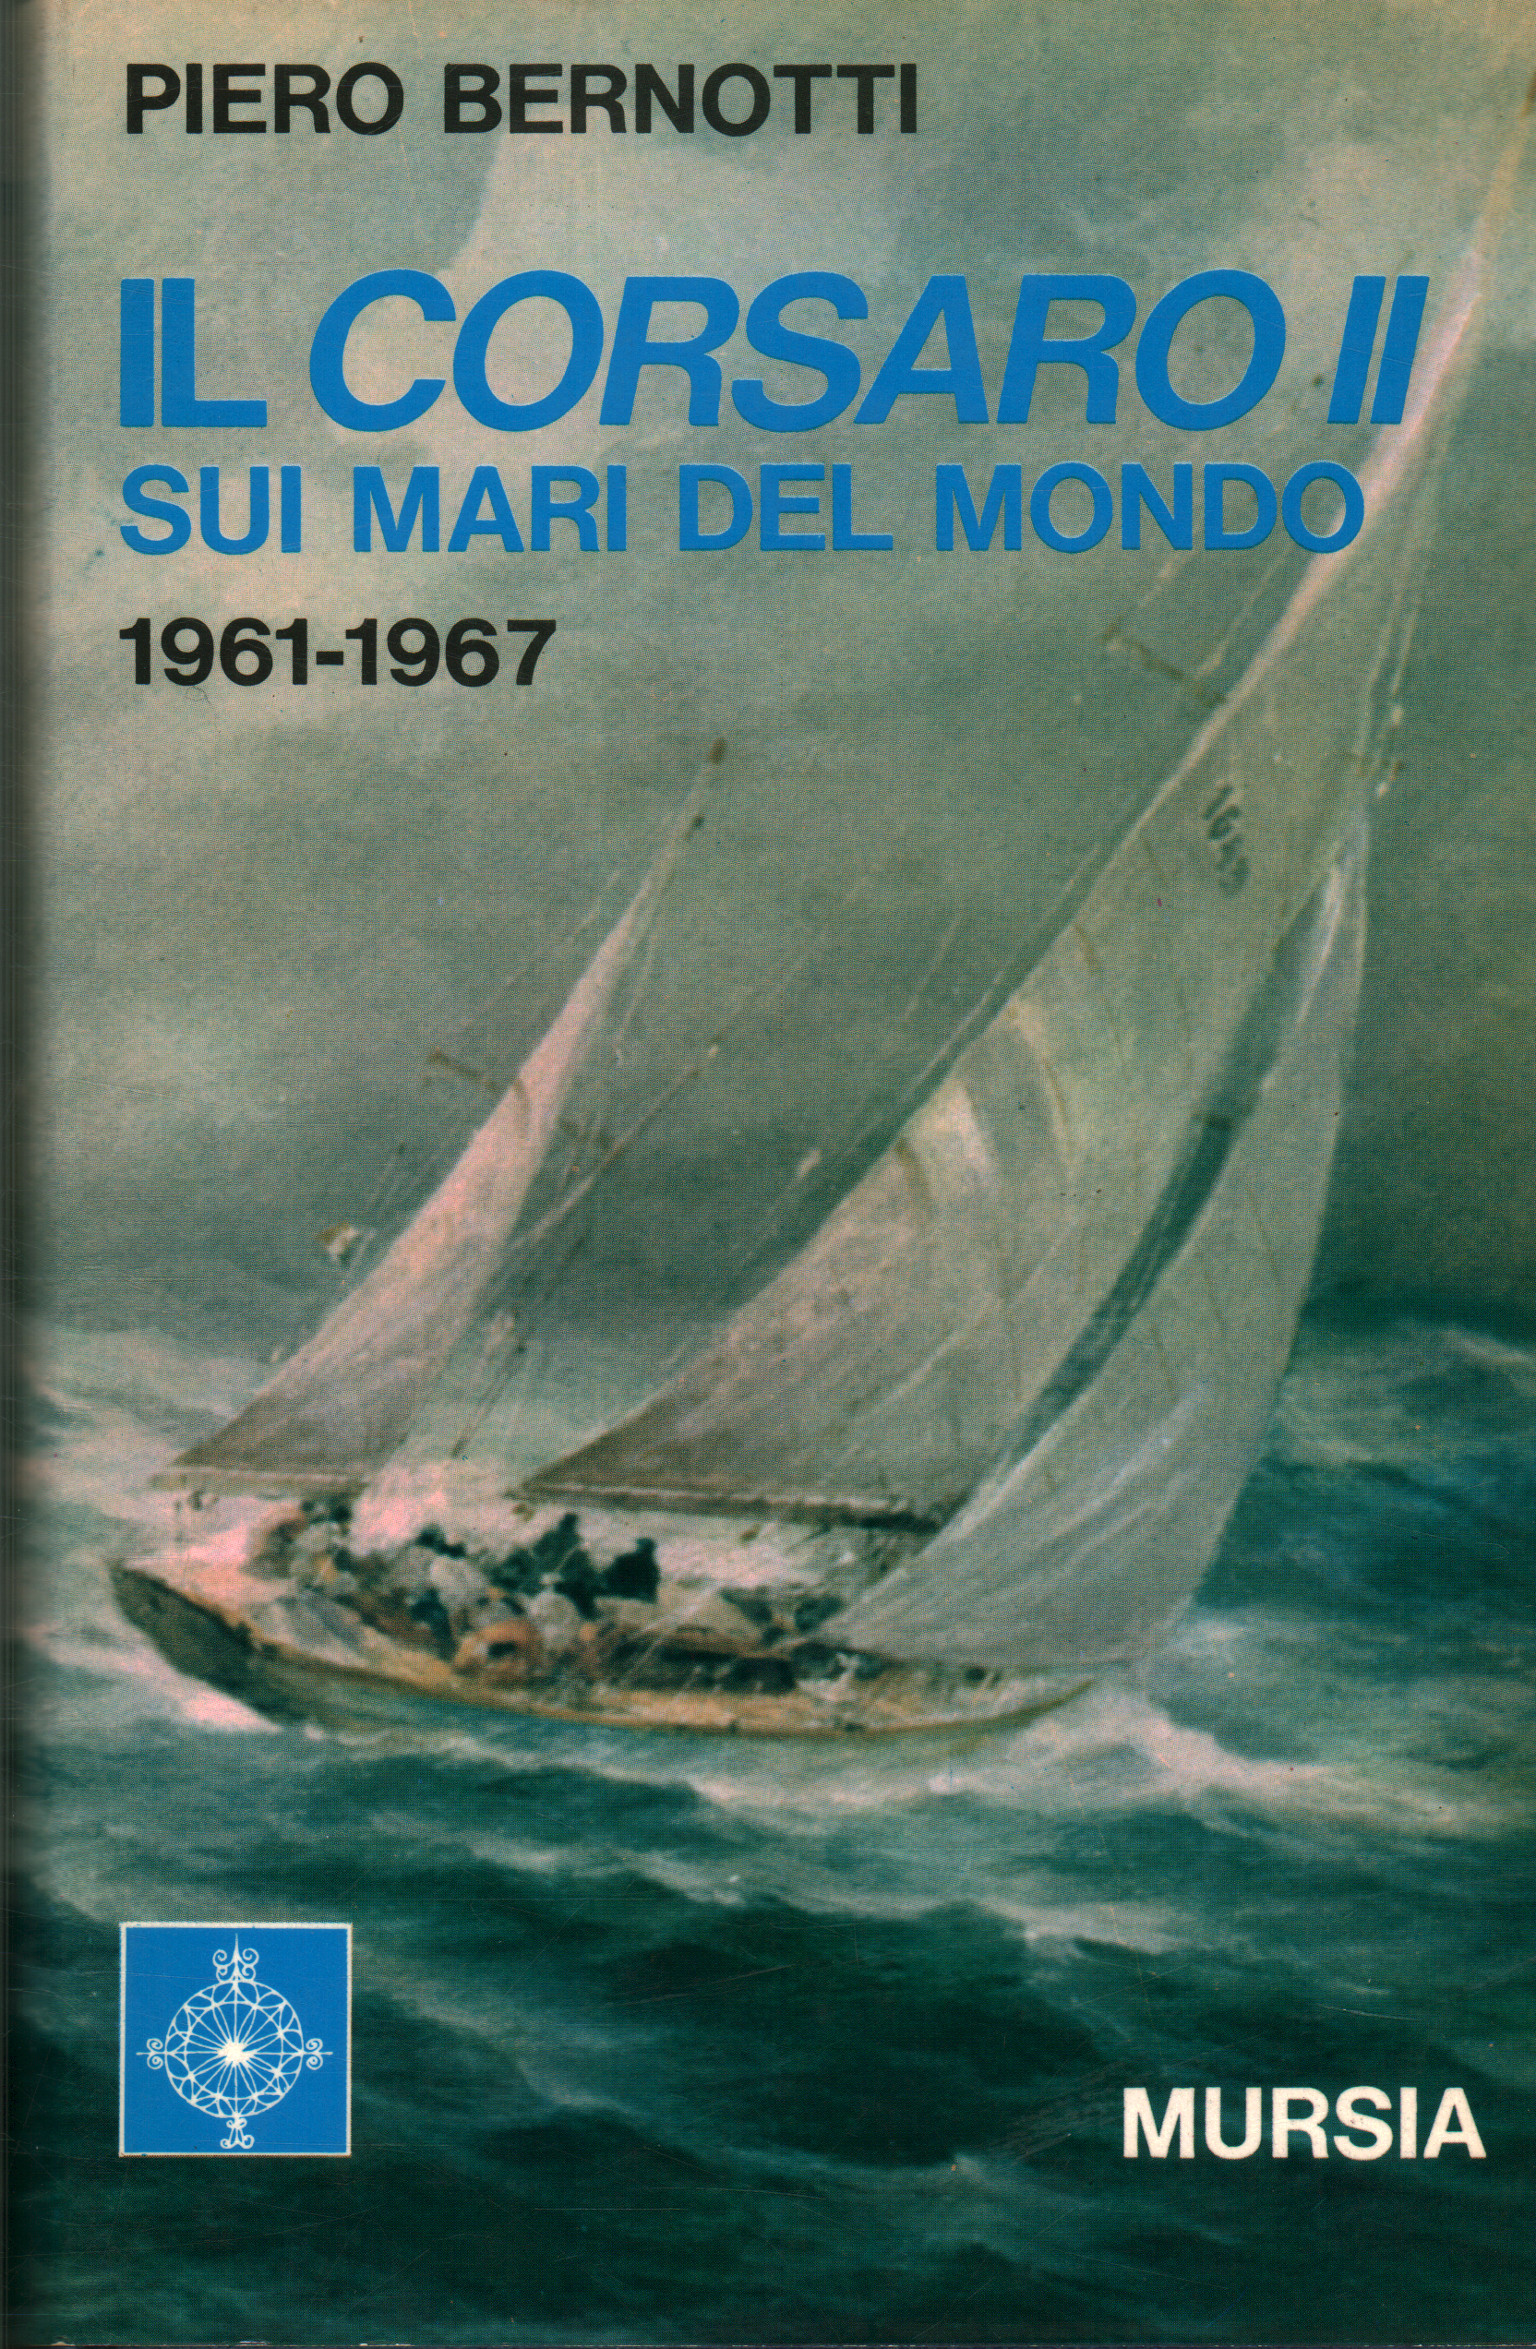 Der Korsar II, Piero Bernotti